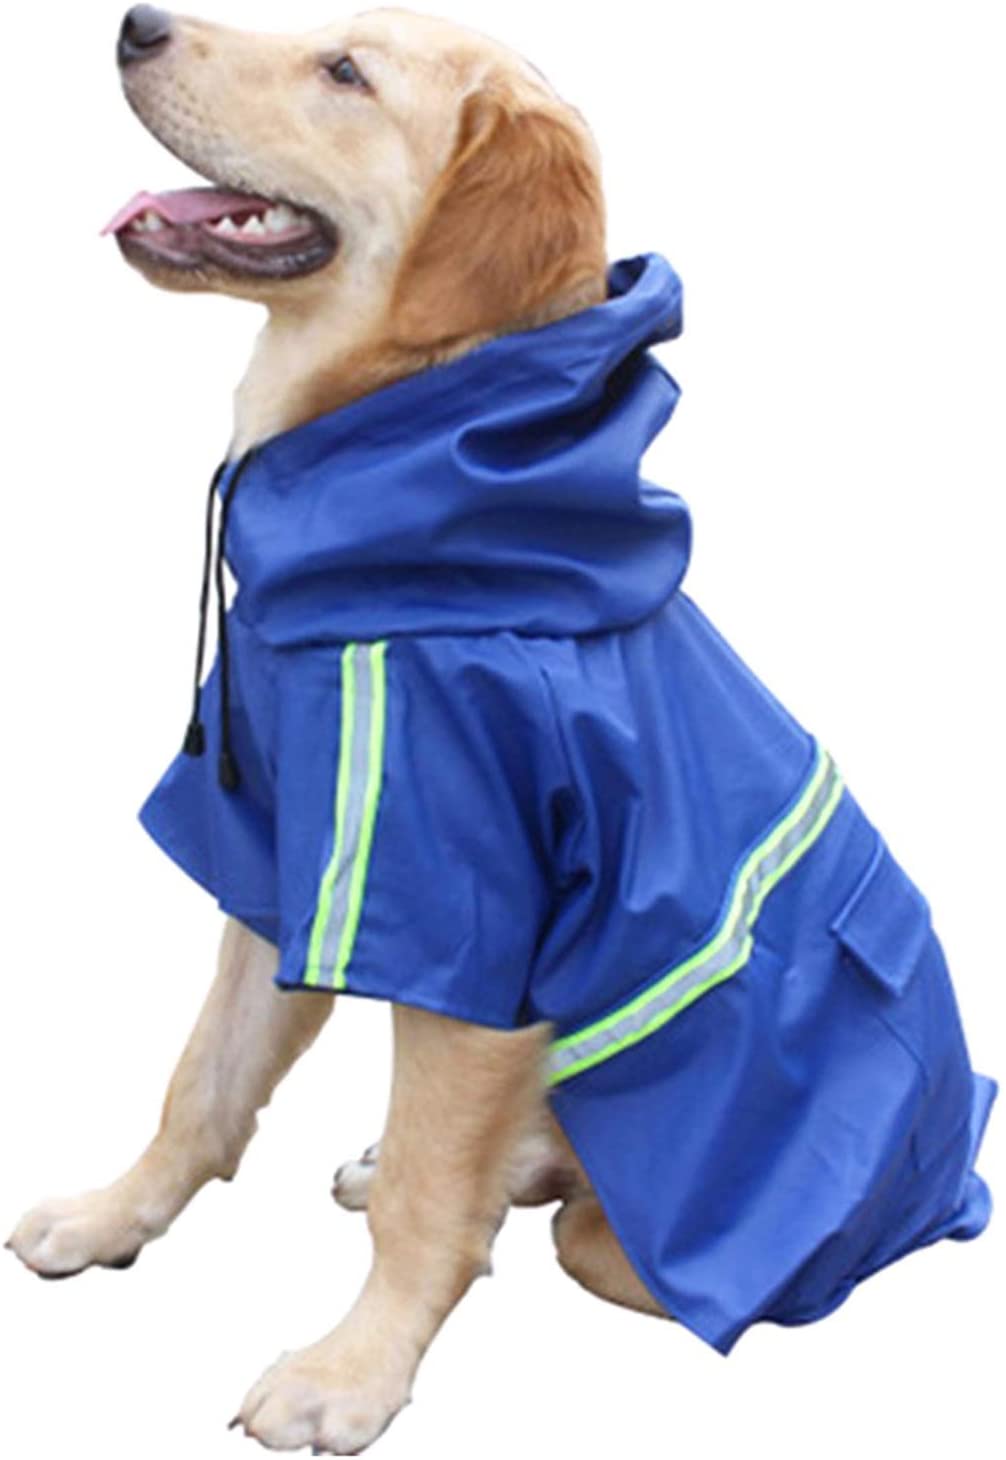 SEHOO犬のレインコート ポンチョ 柴犬 中型犬 ライフジャ ケット 小型犬 大型犬 ペット用品 雨具 防水 軽量 反射テ ープ付き